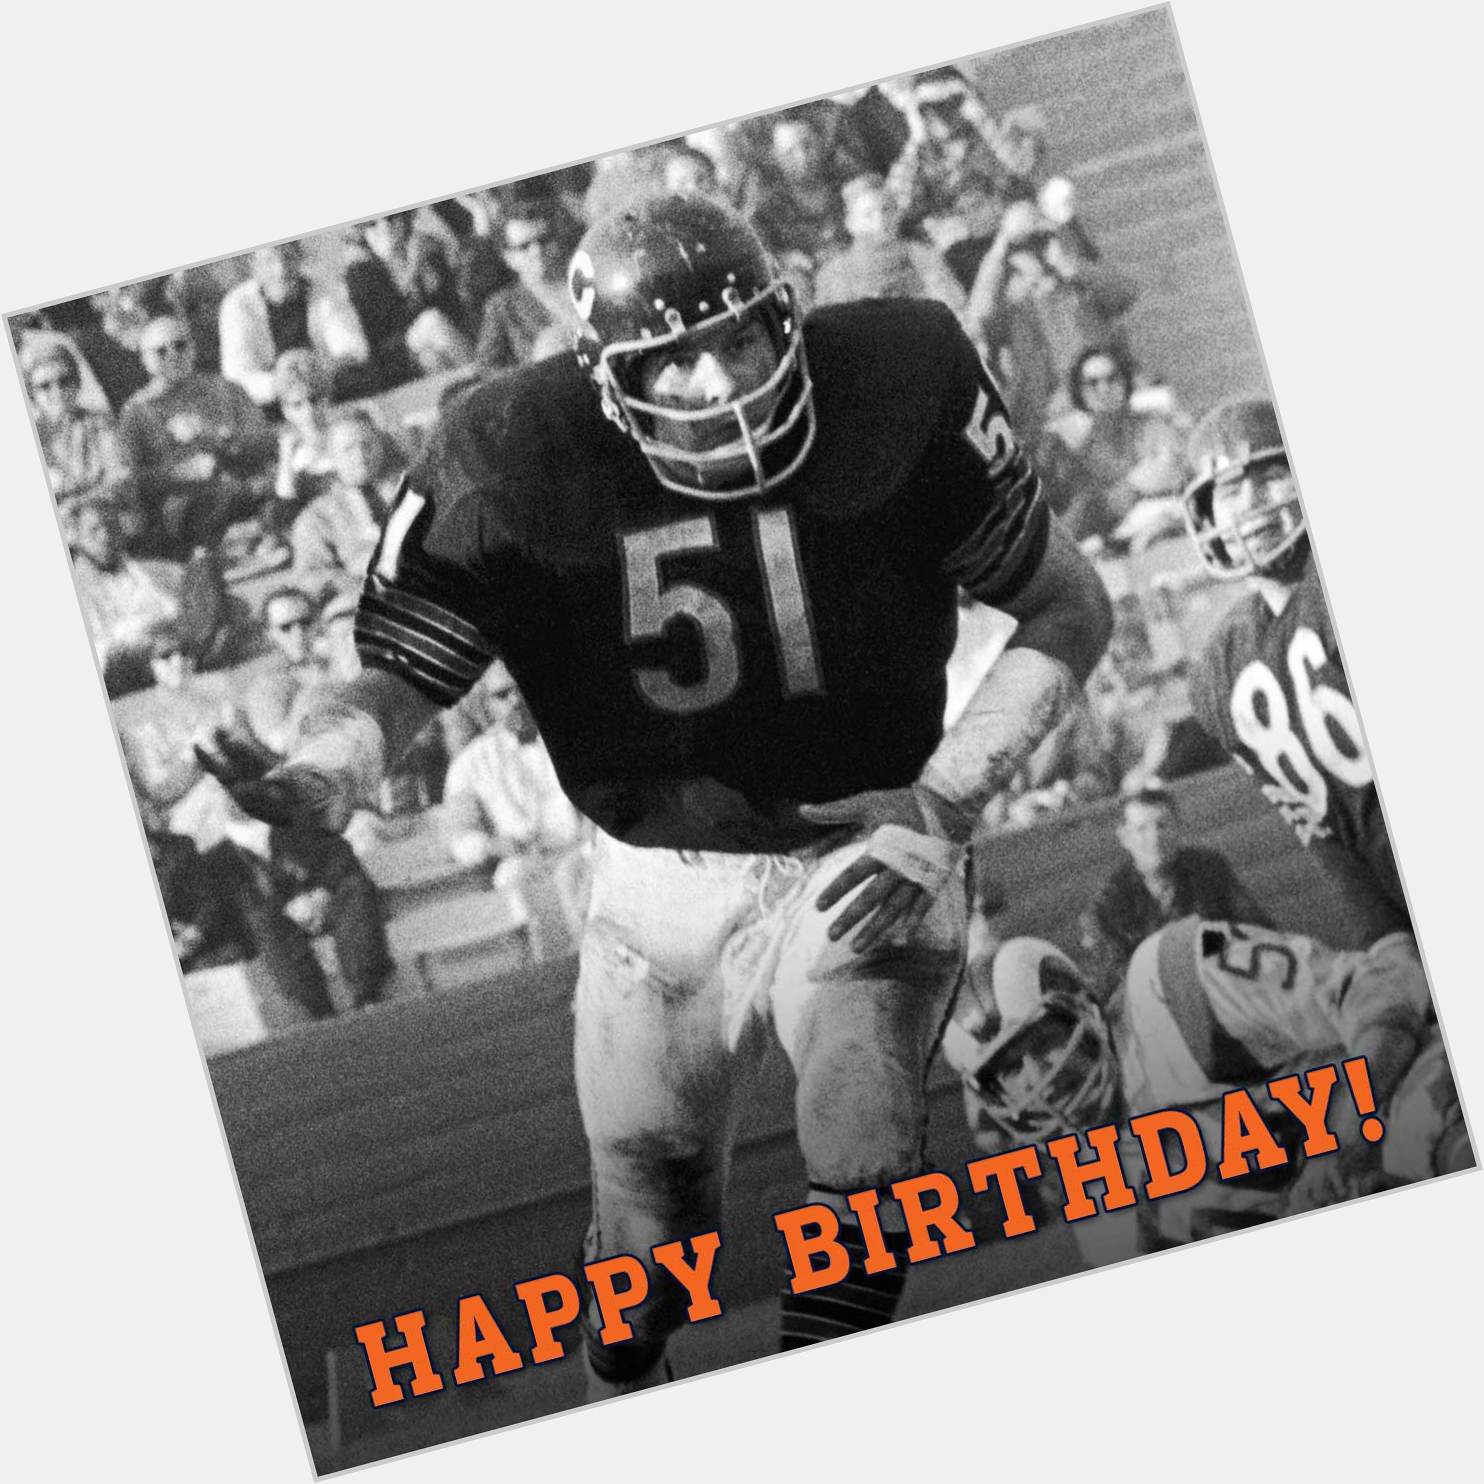 To wish Dick Butkus a Happy Birthday! 